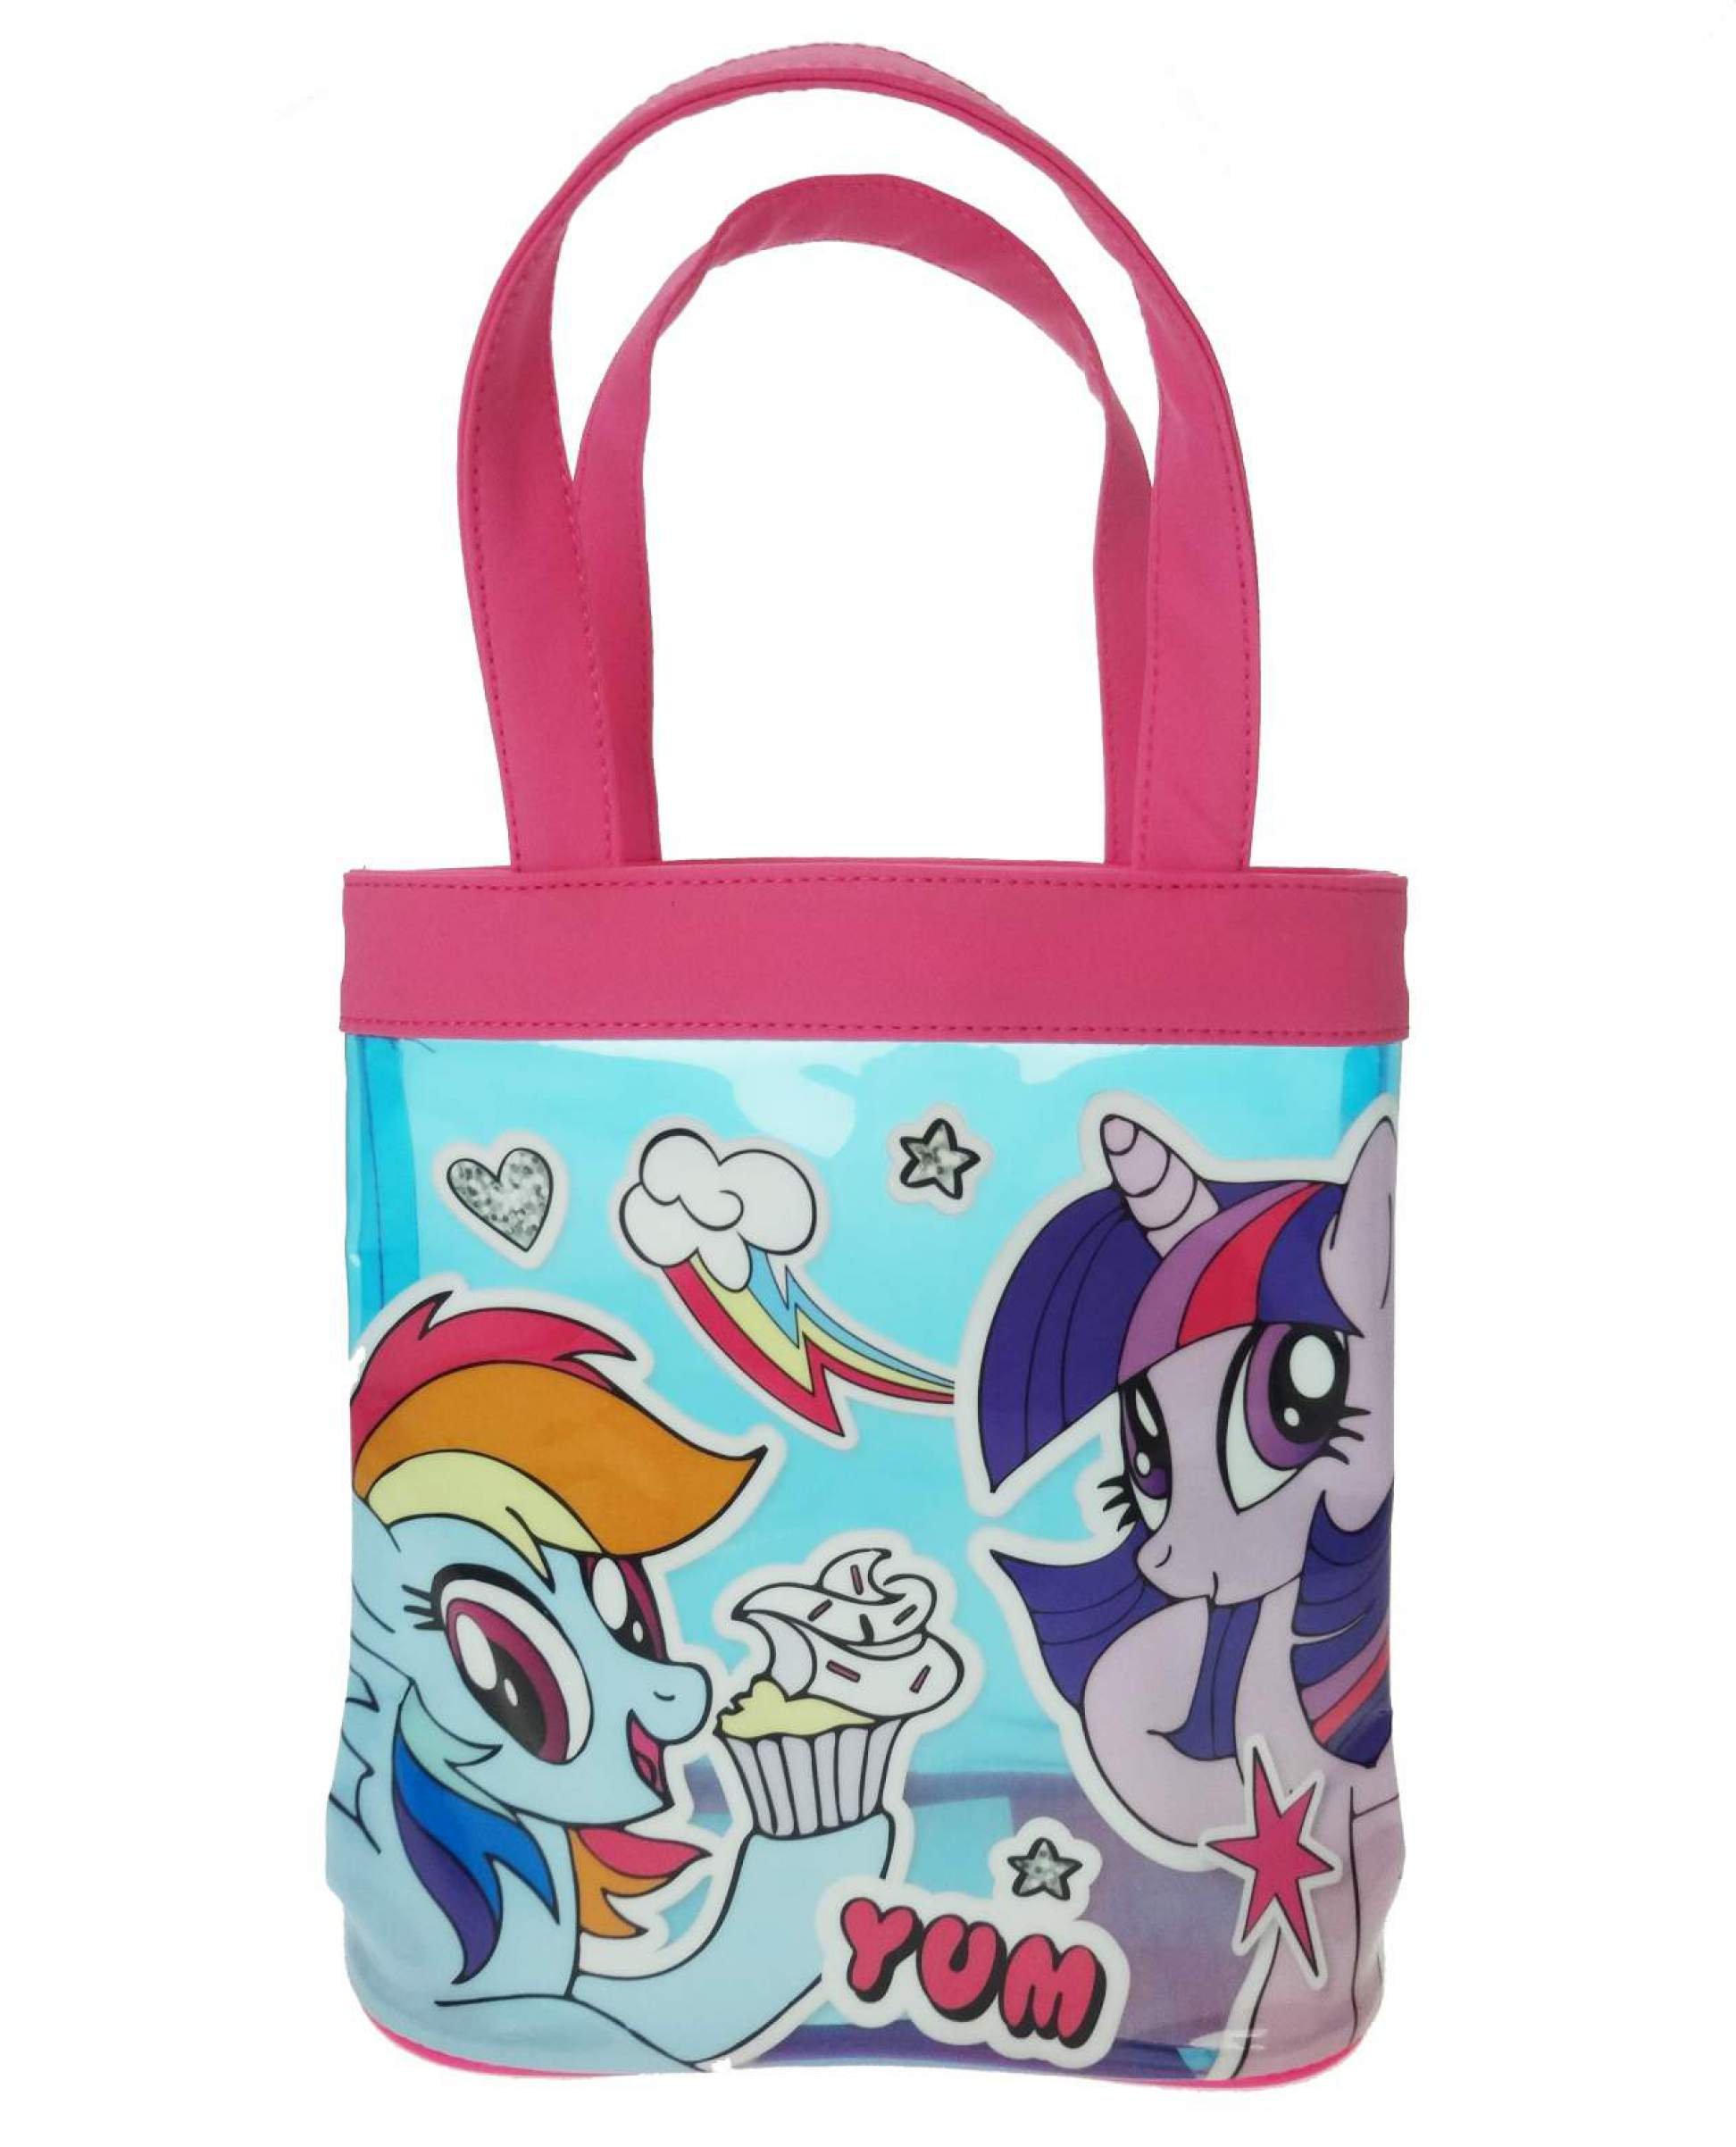 My Little Pony 'Yum' Tote Bag Shopping Shopper 5036278075070